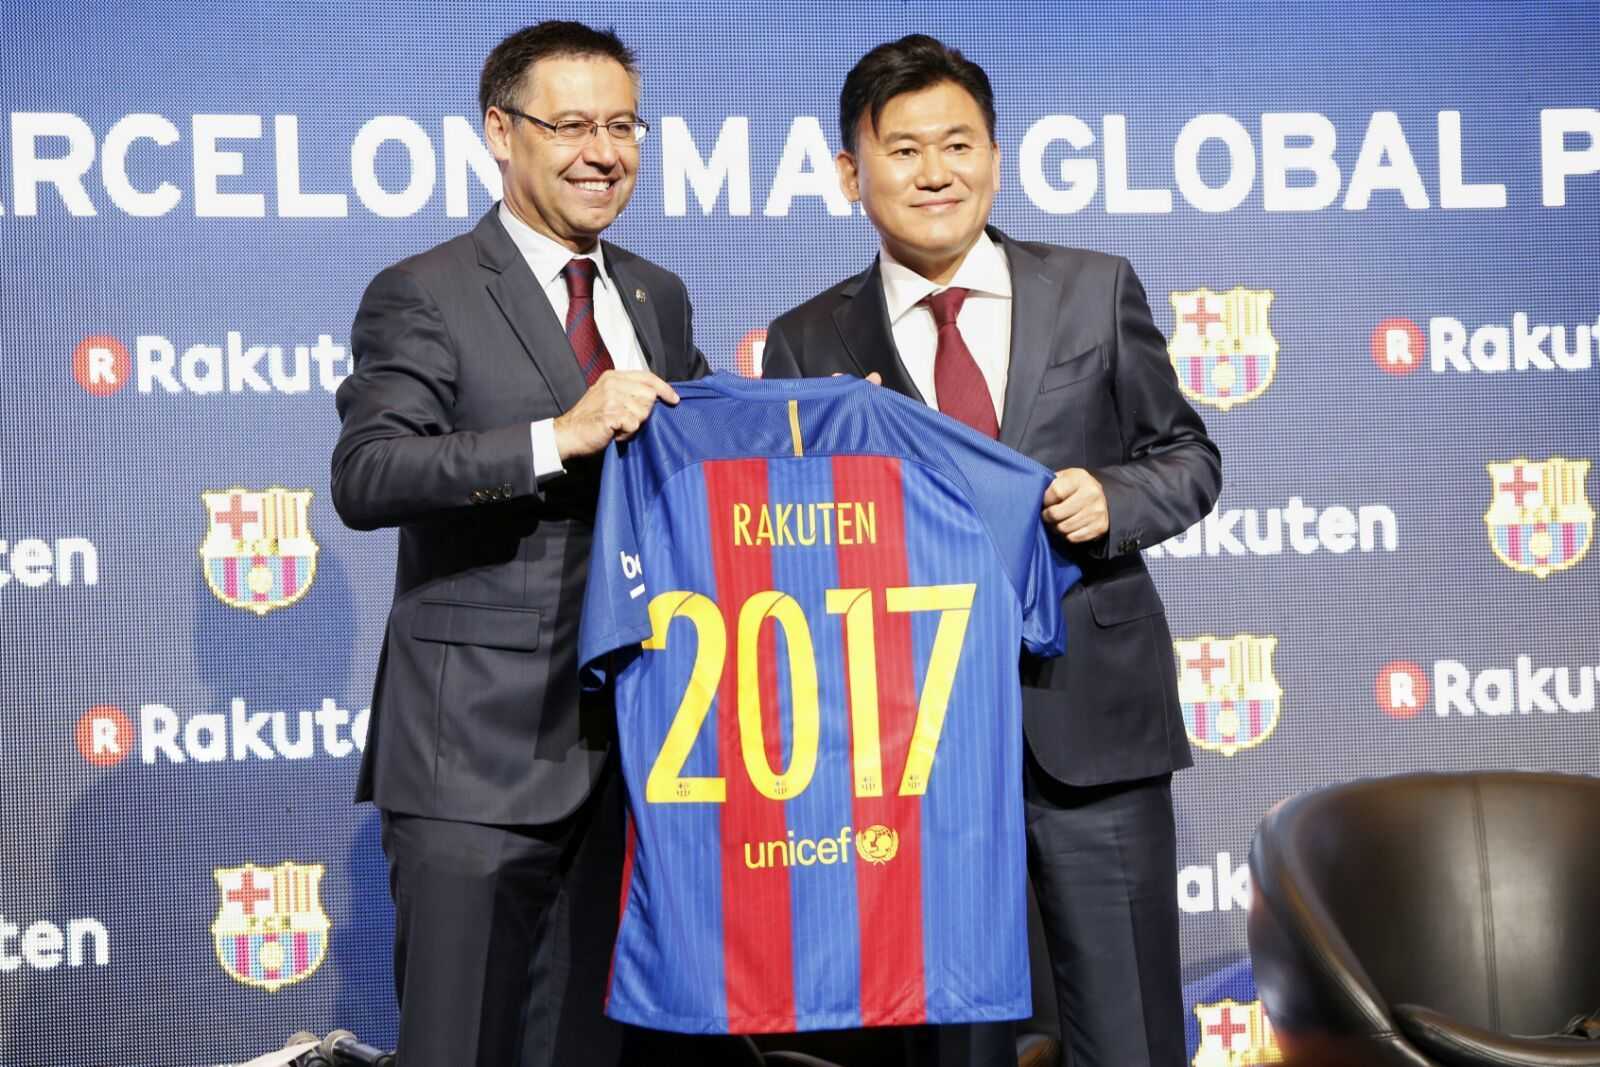 Rakuten, nou patrocinador del Barça fins al 2021